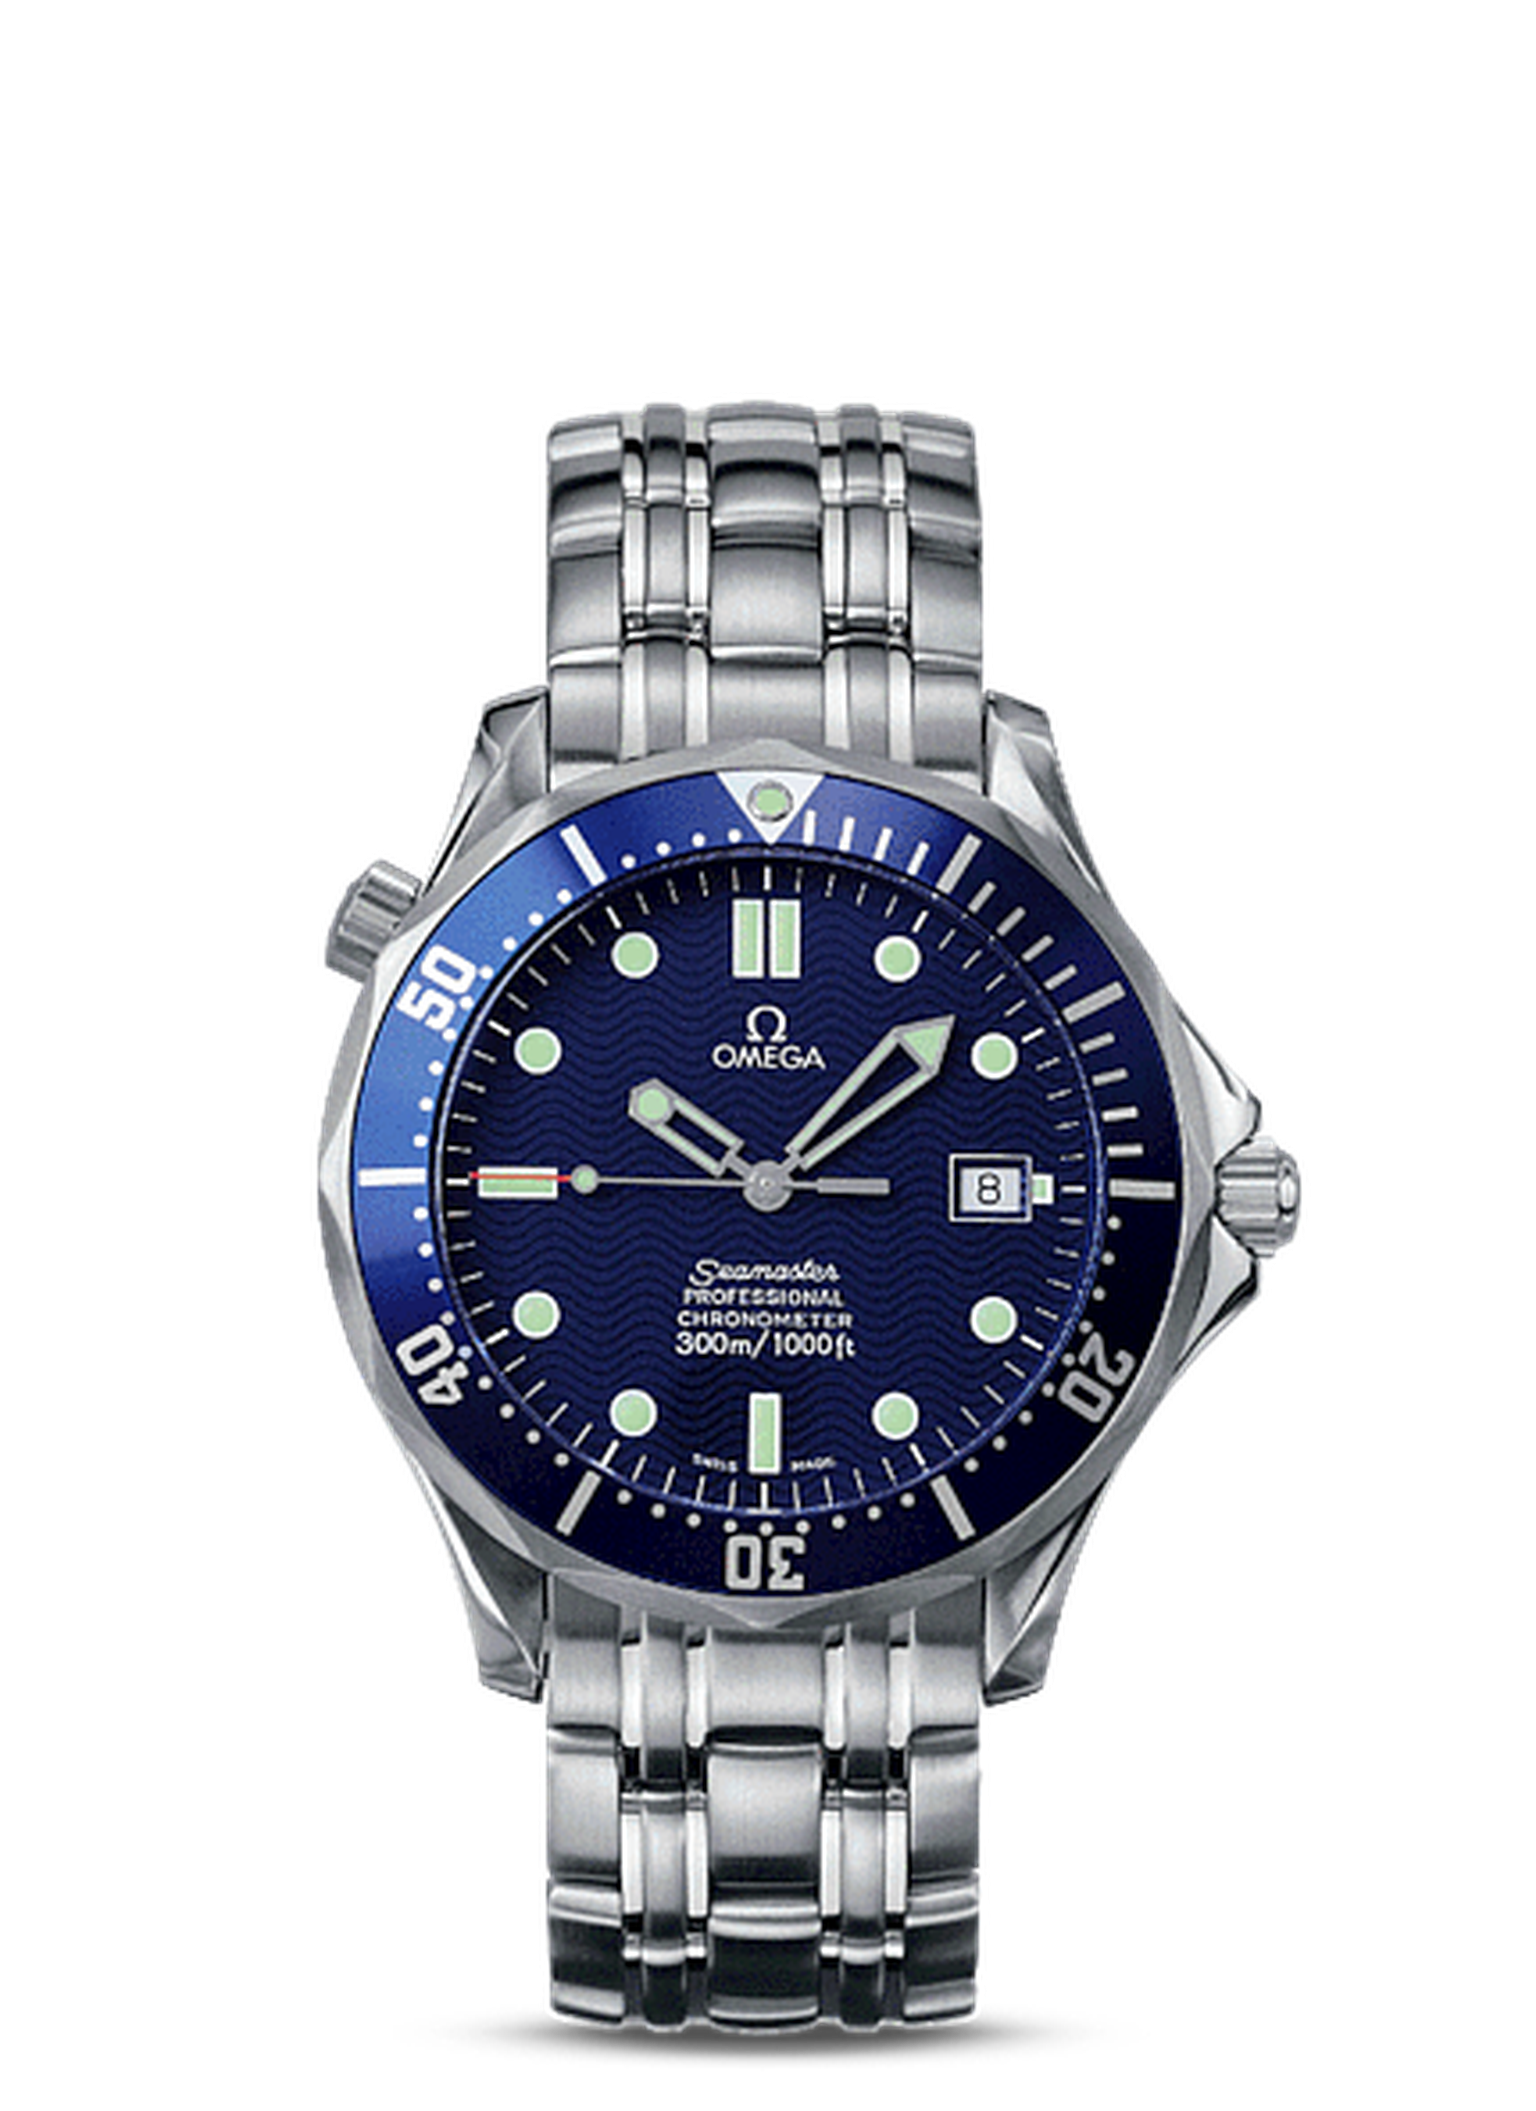 Omega Seamaster 300m chronometer watch 